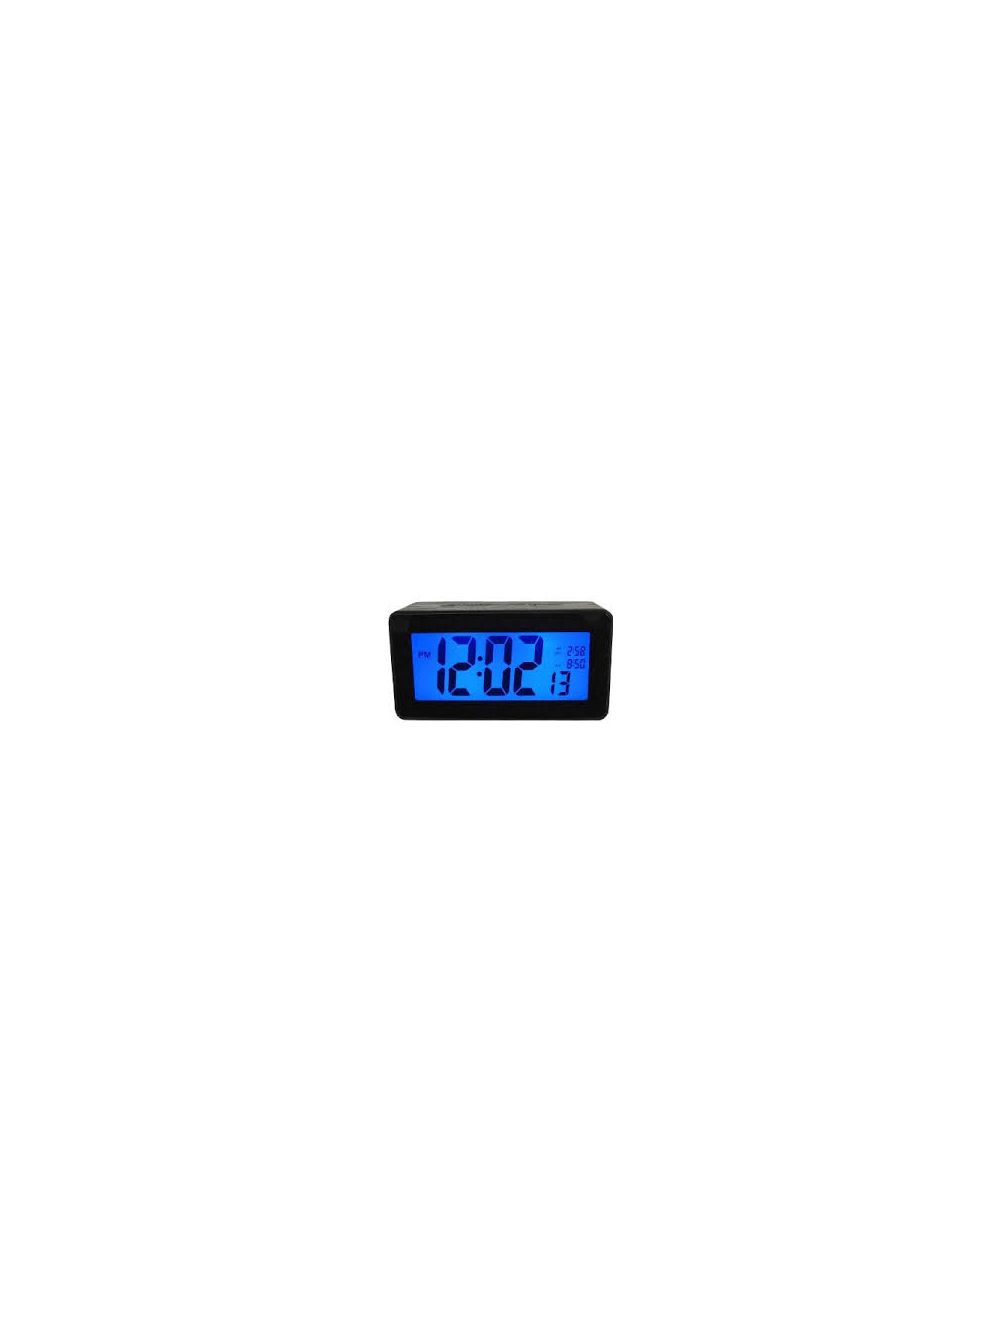 bluetooth radio clock alarm touch screen